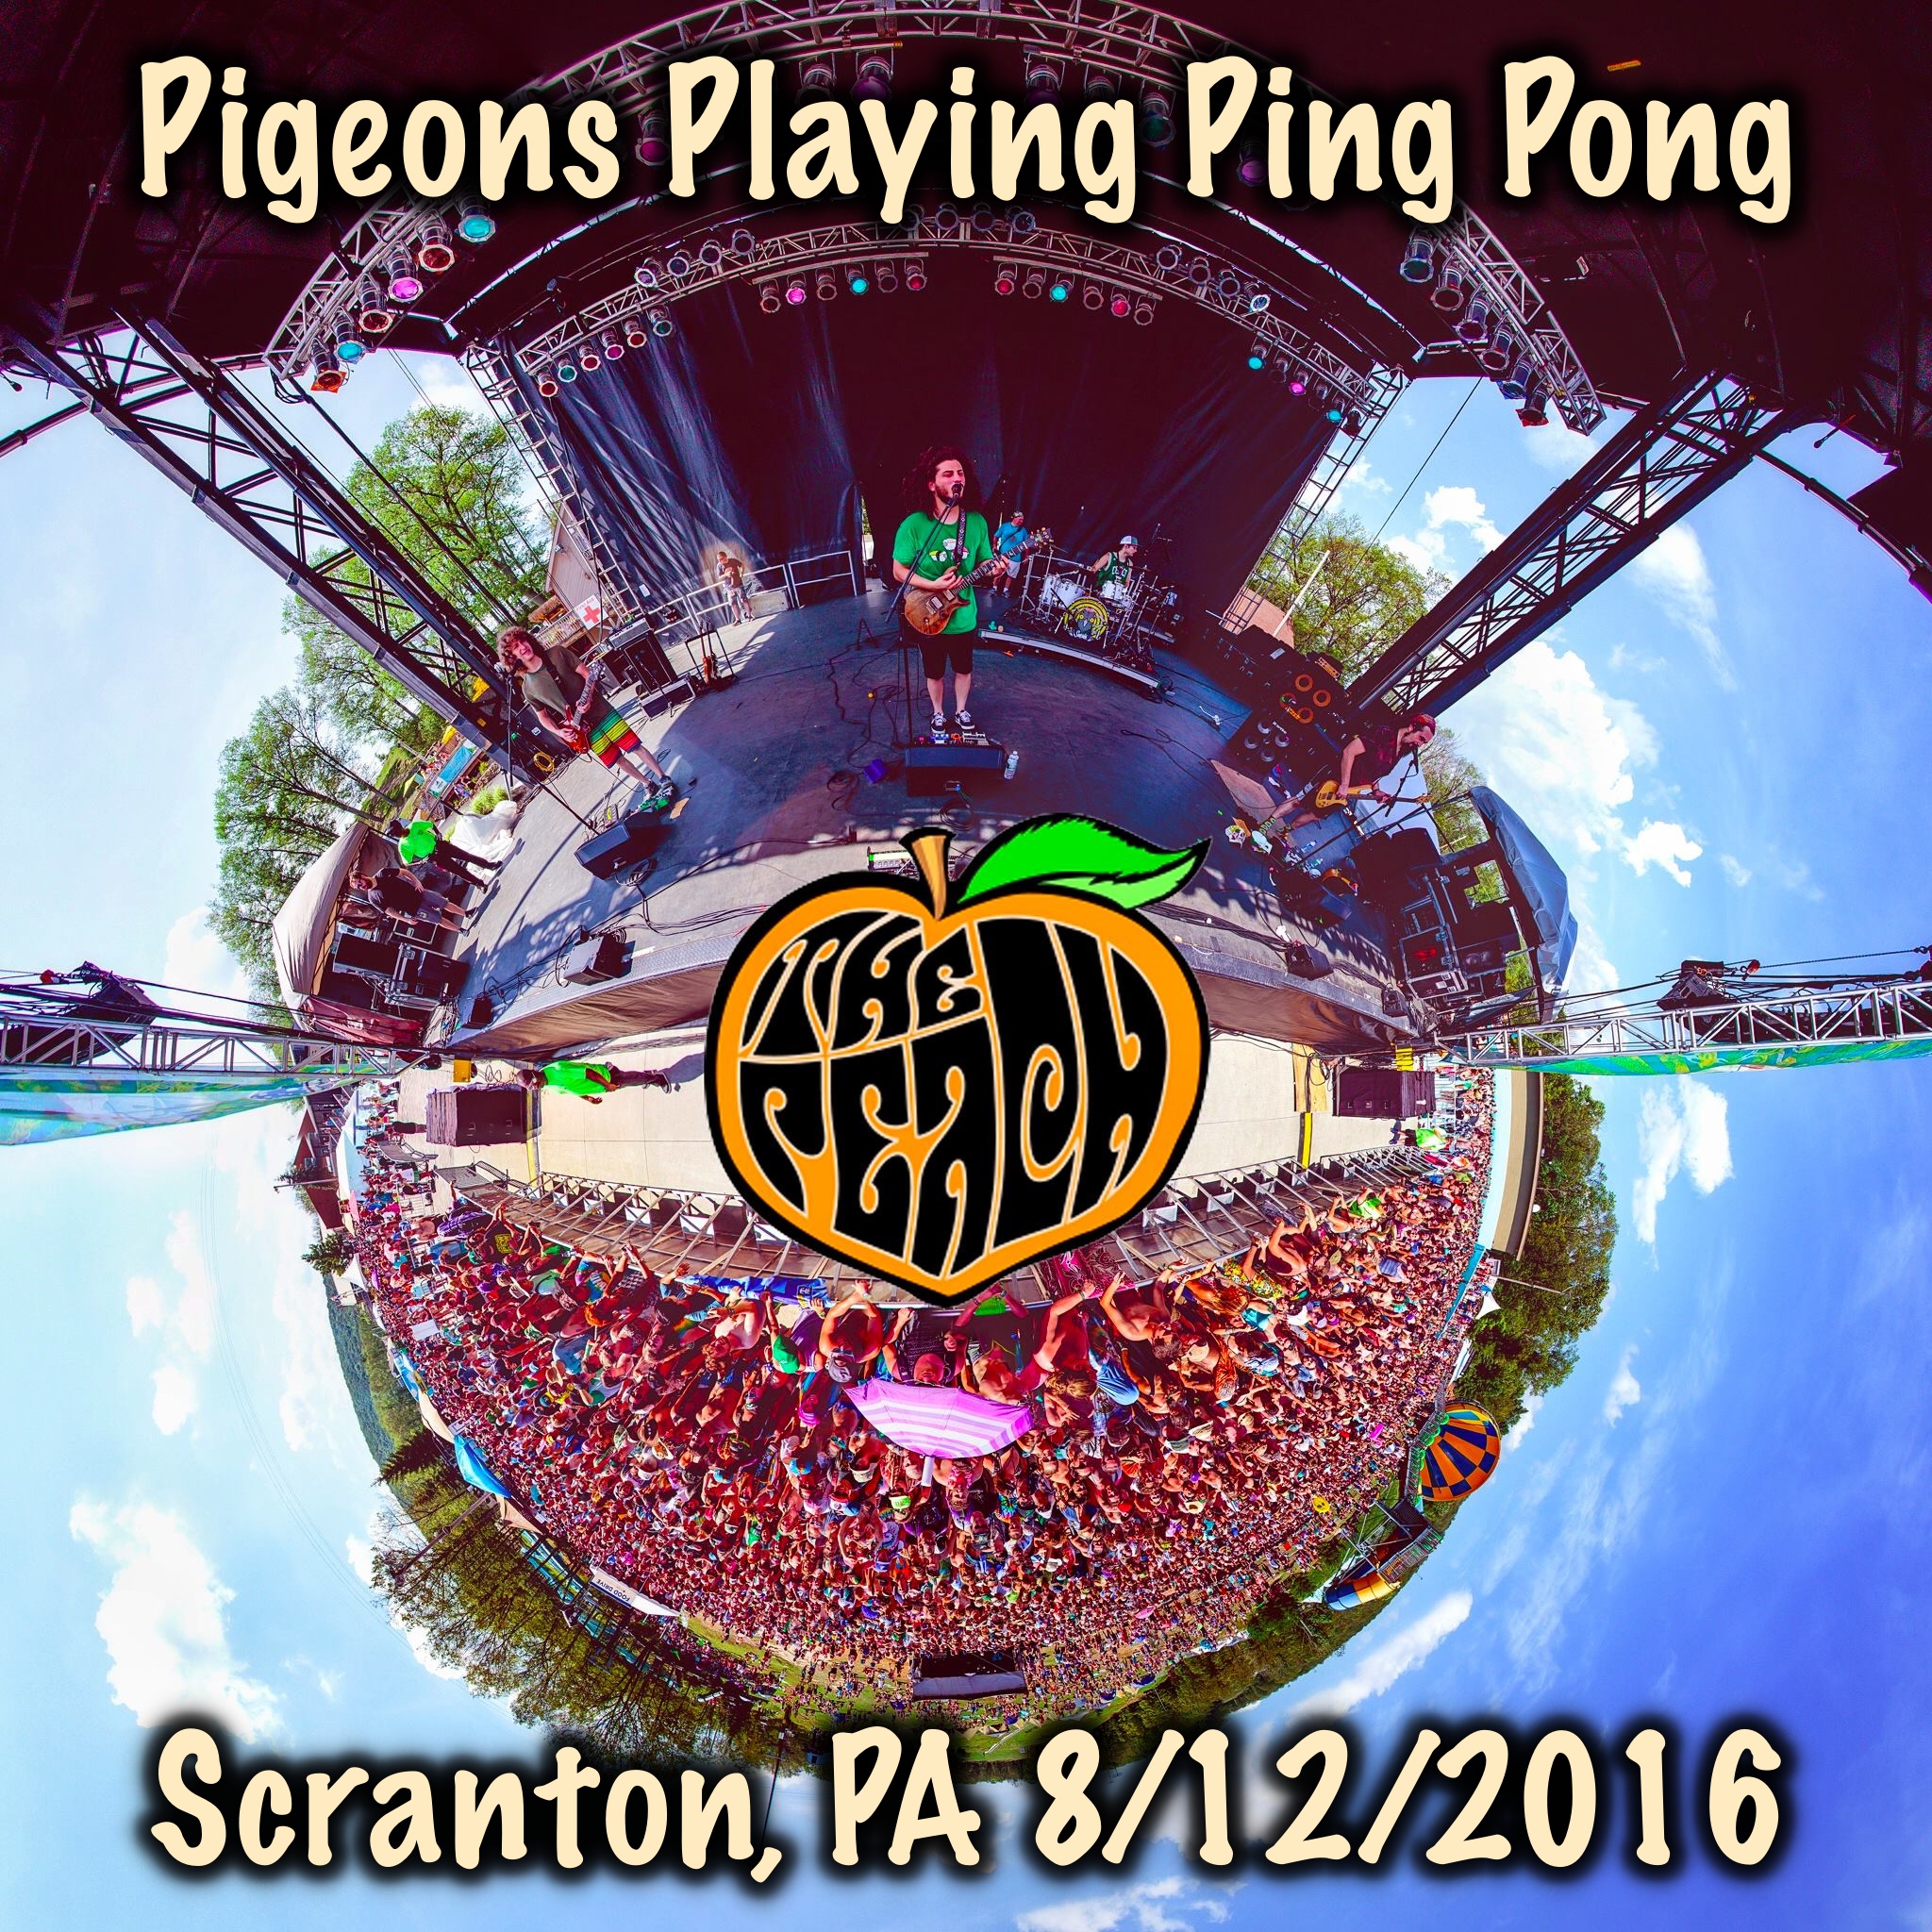 PigeonsPlayingPingPong2016-08-12PeachMusicFestivalScrantonPA.jpg